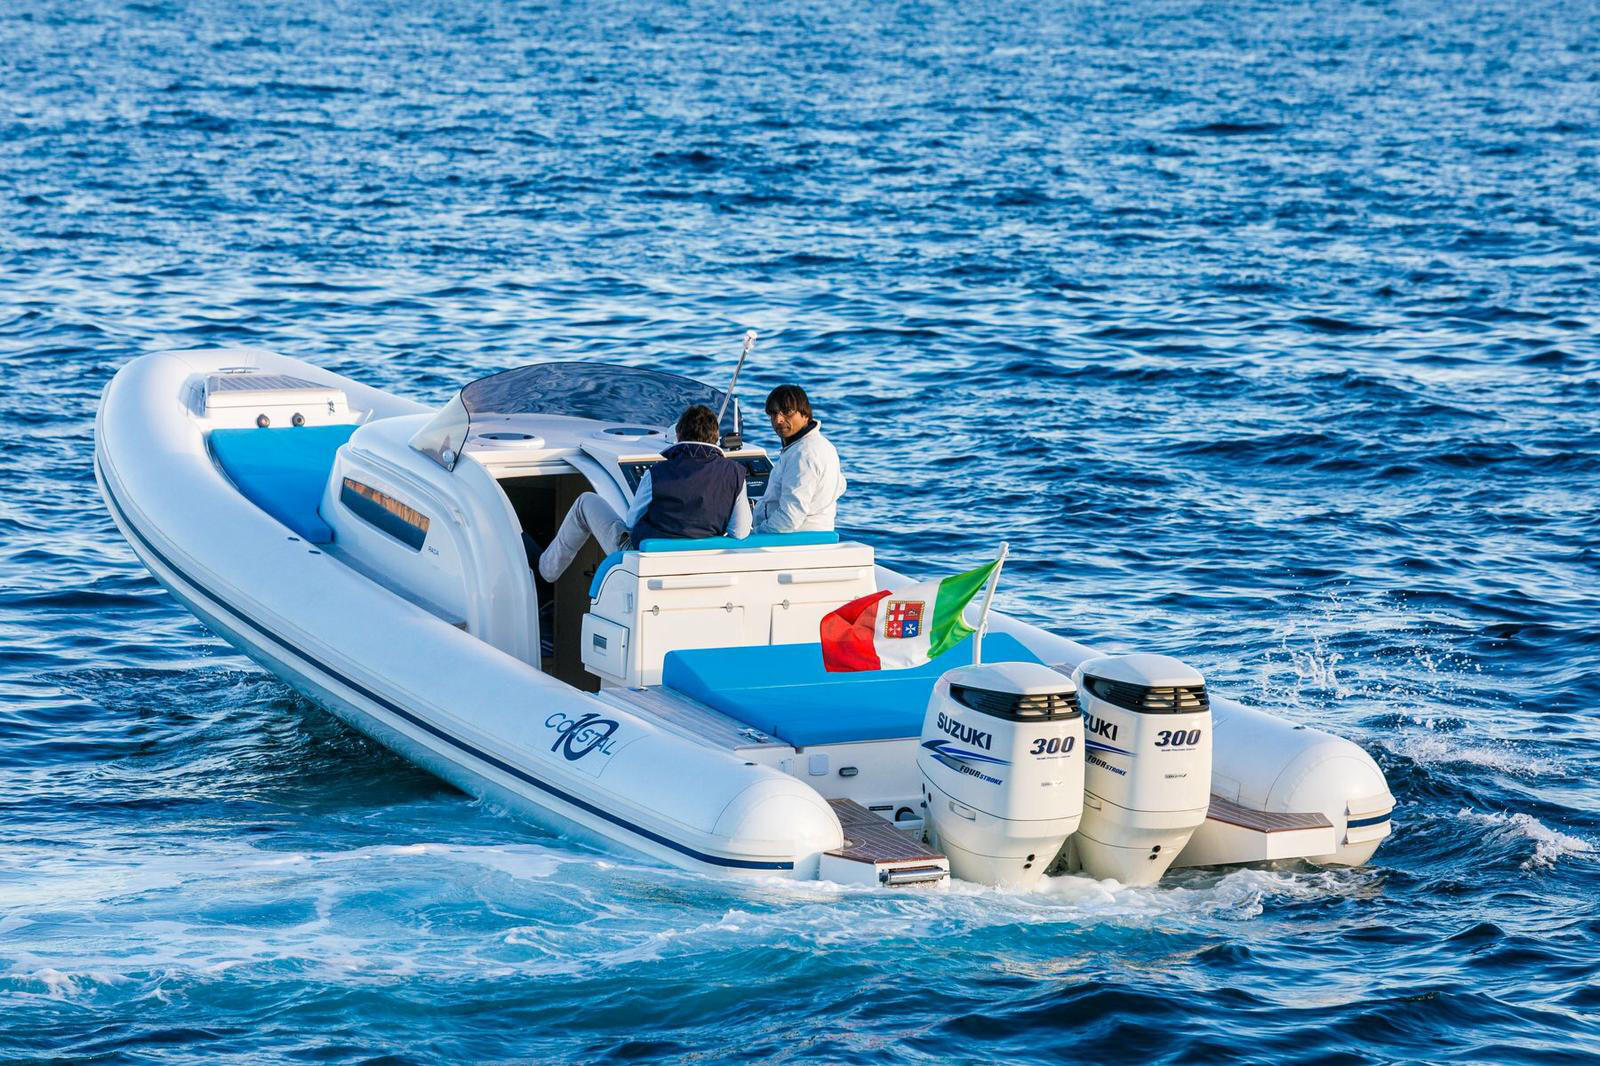 Nauticsud in Naples – 800 boats on display